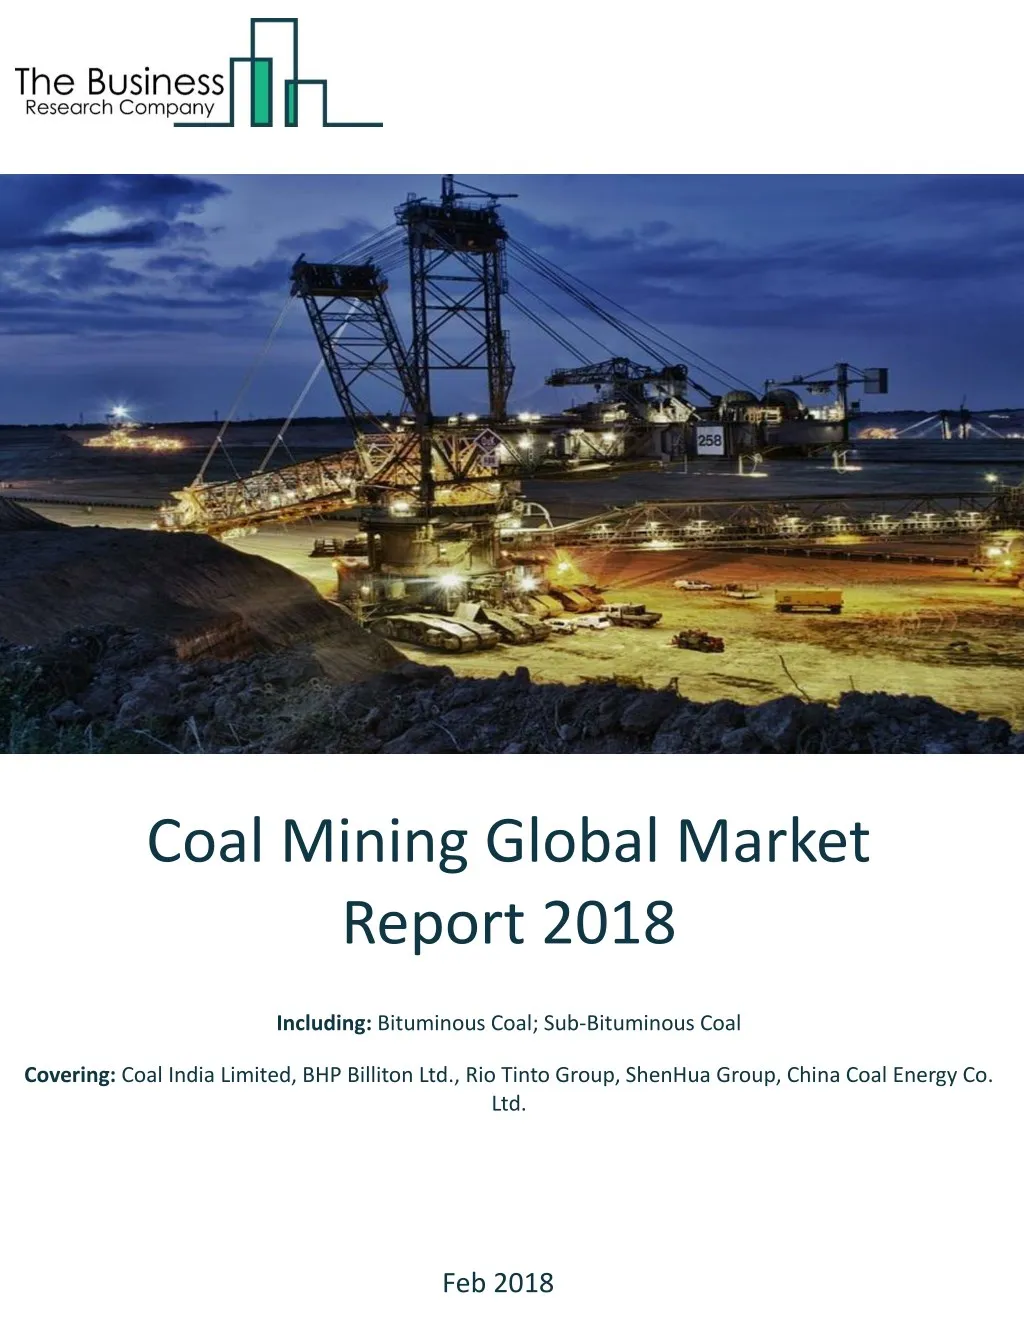 coal mining global market report 2018